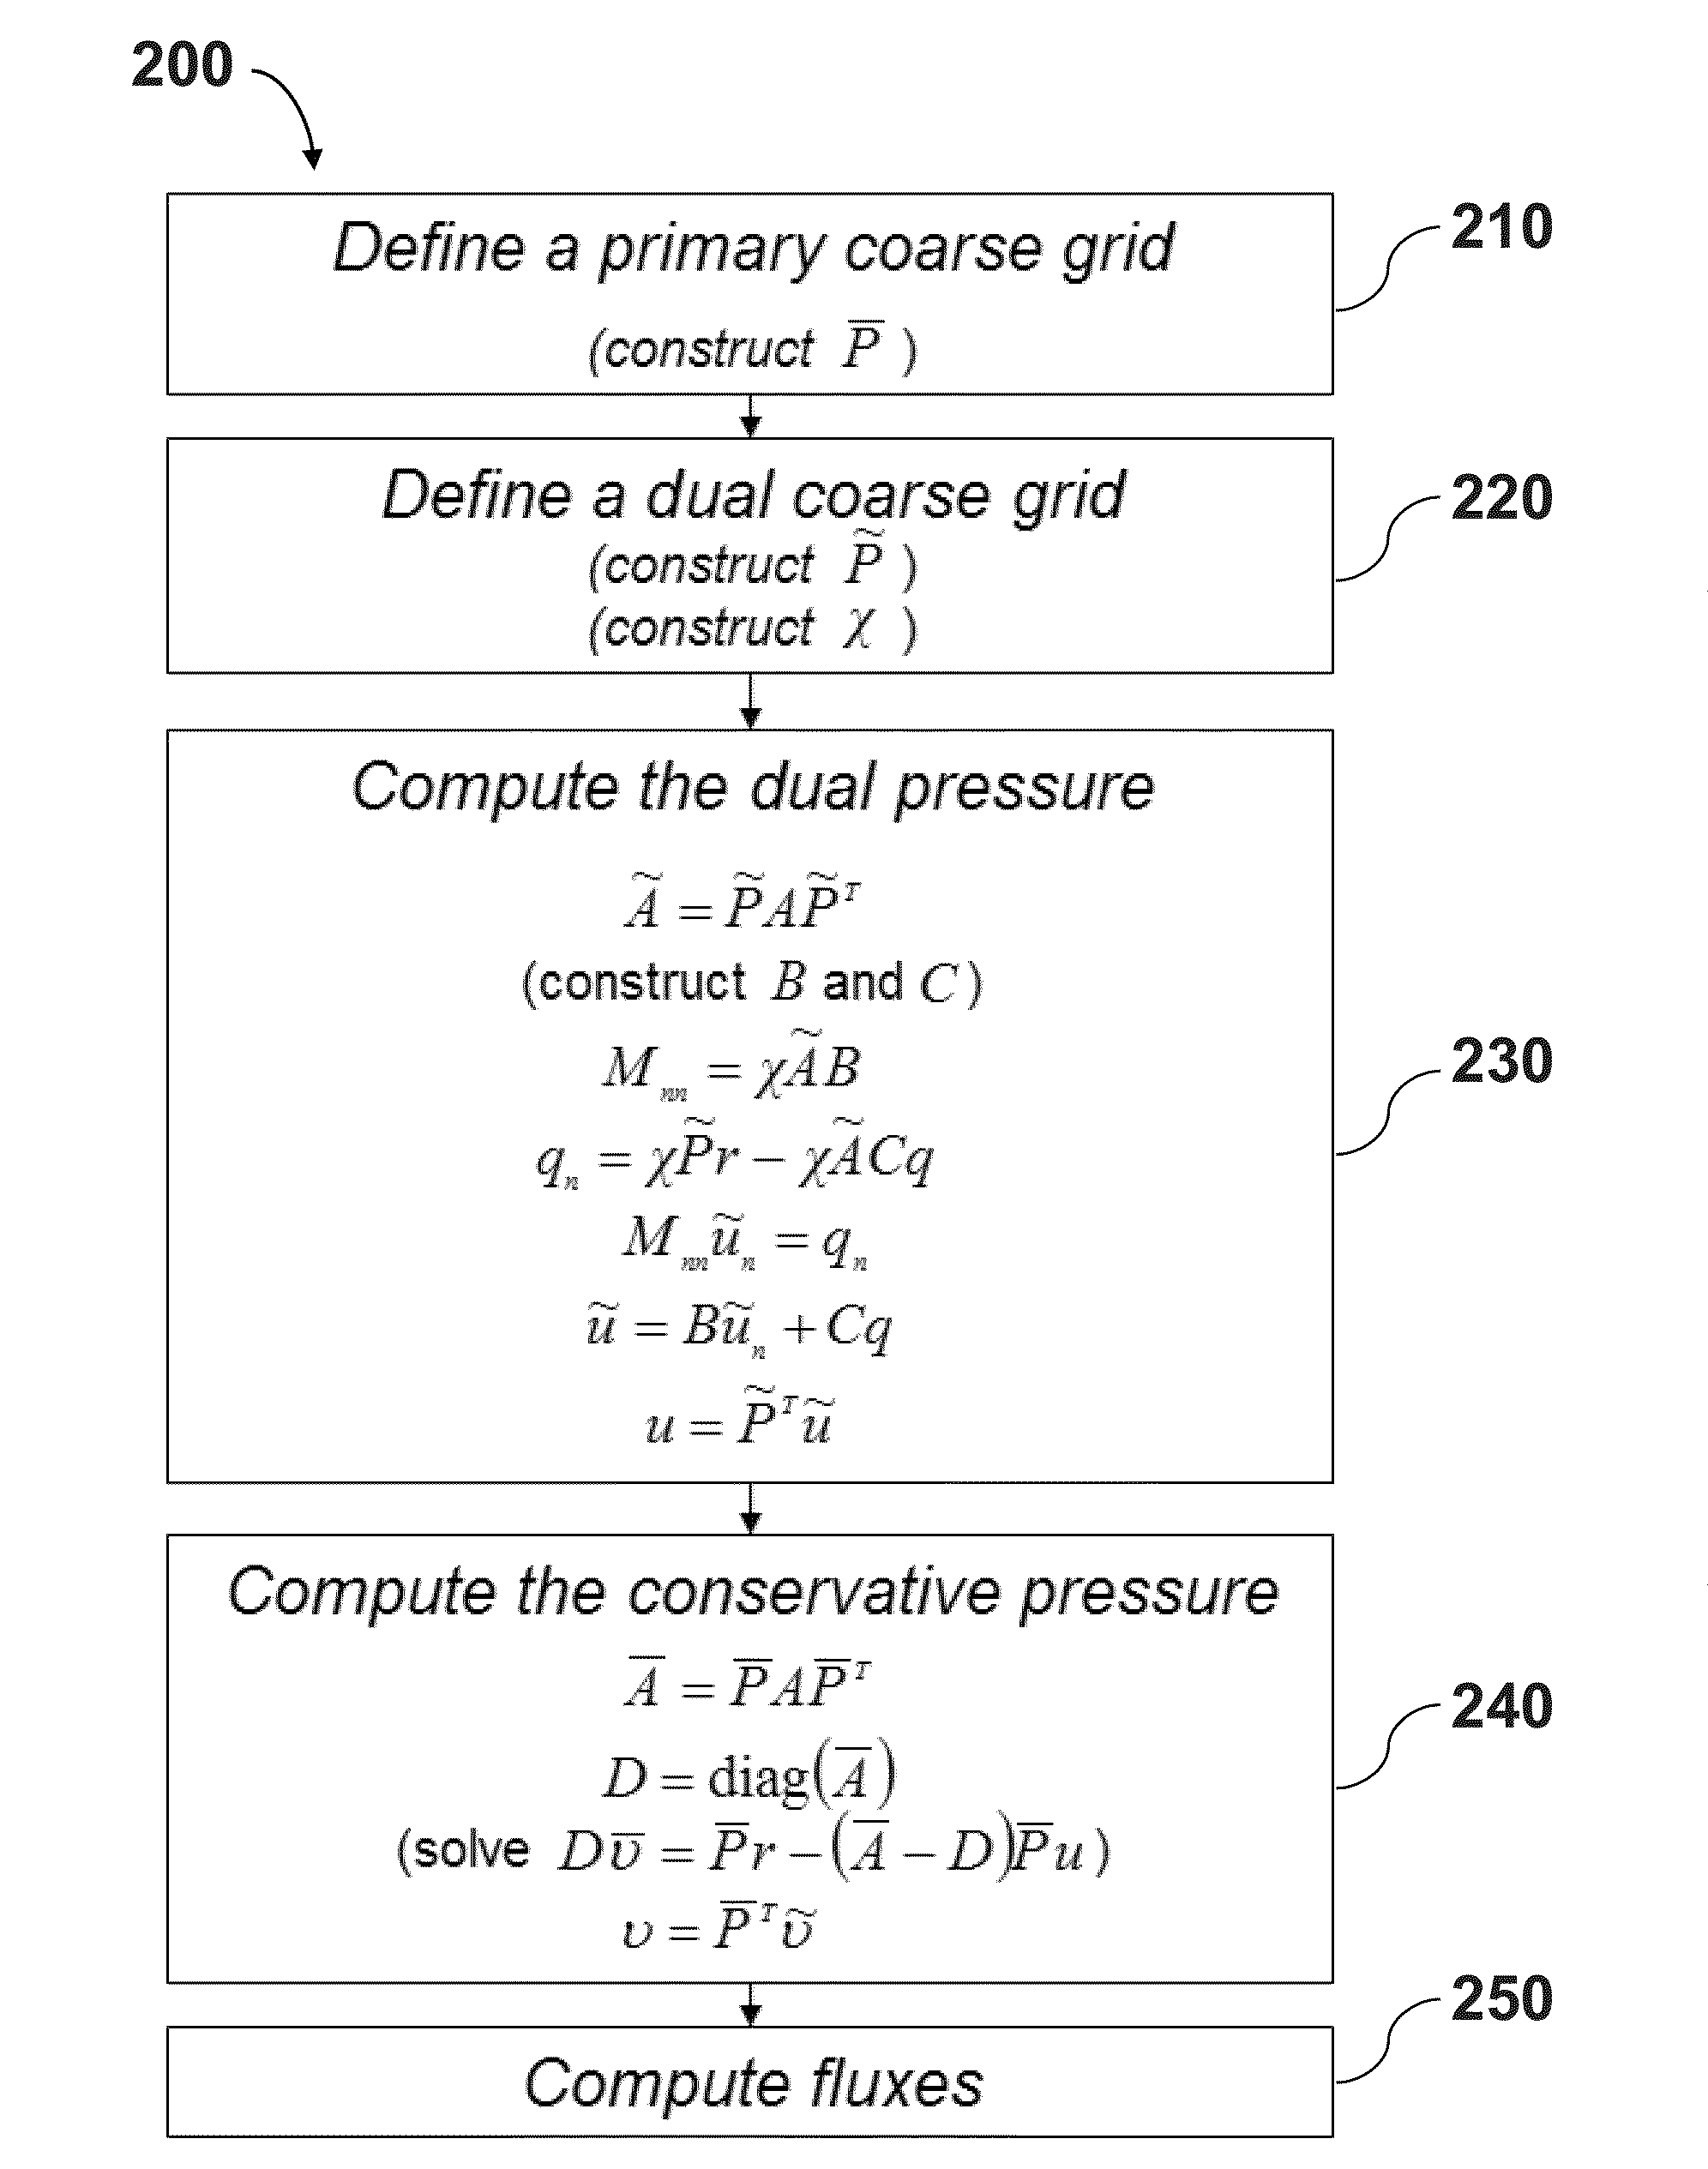 Multi-scale finite volume method for reservoir simulation